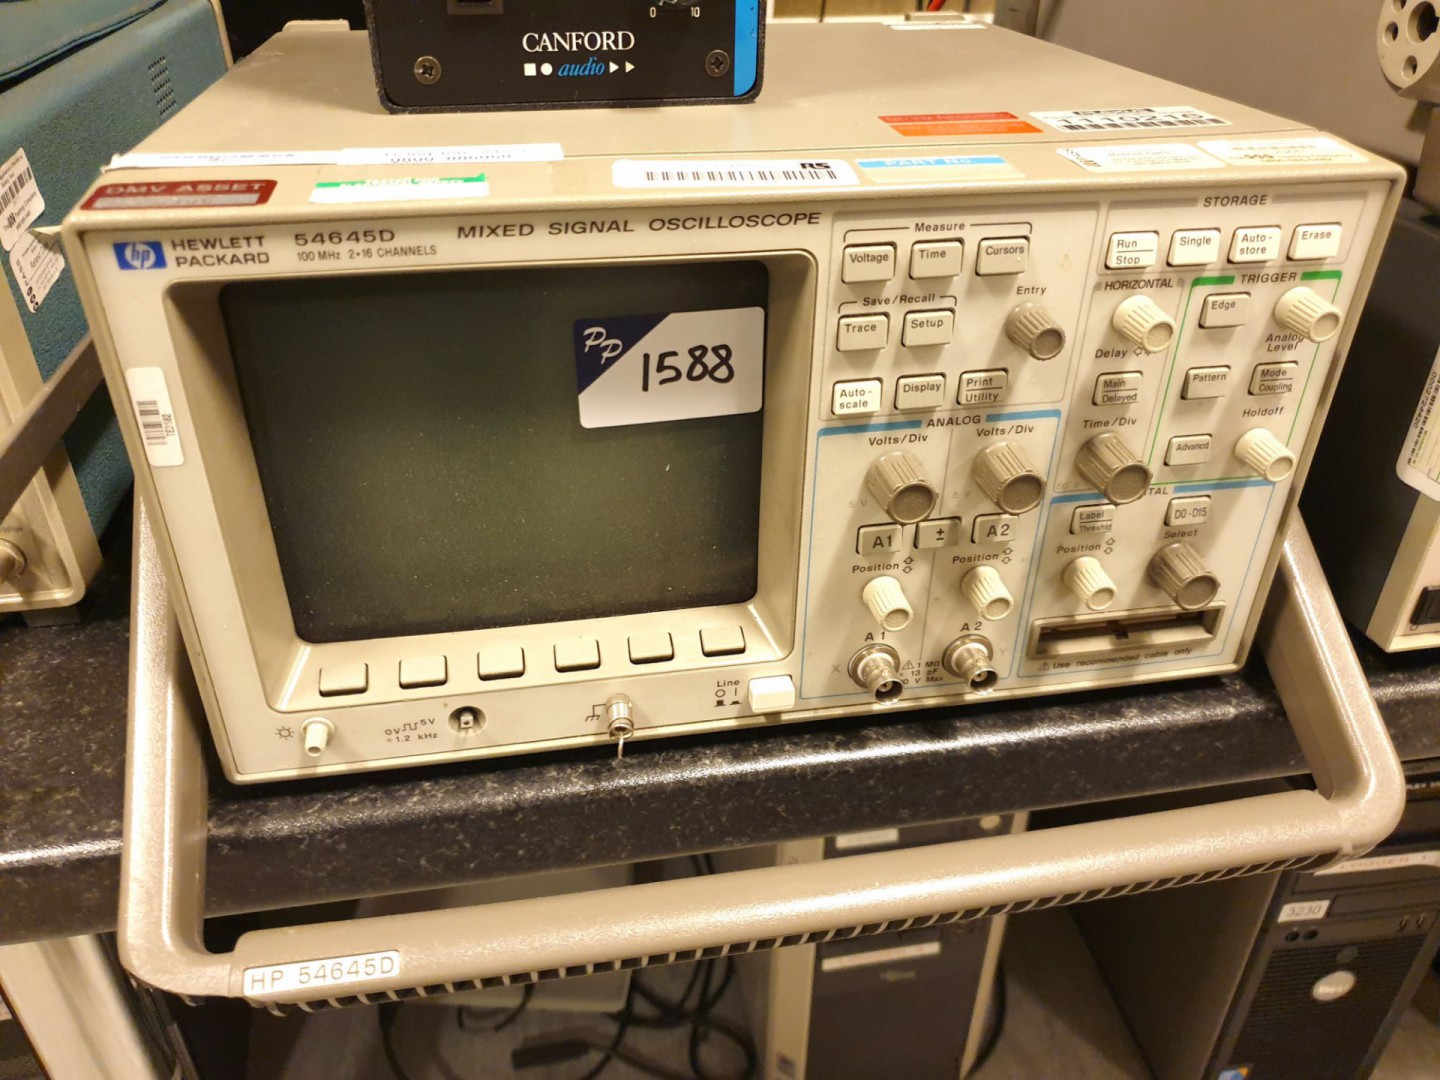 HP 54645D mixed signal oscilloscope (spares or rep...